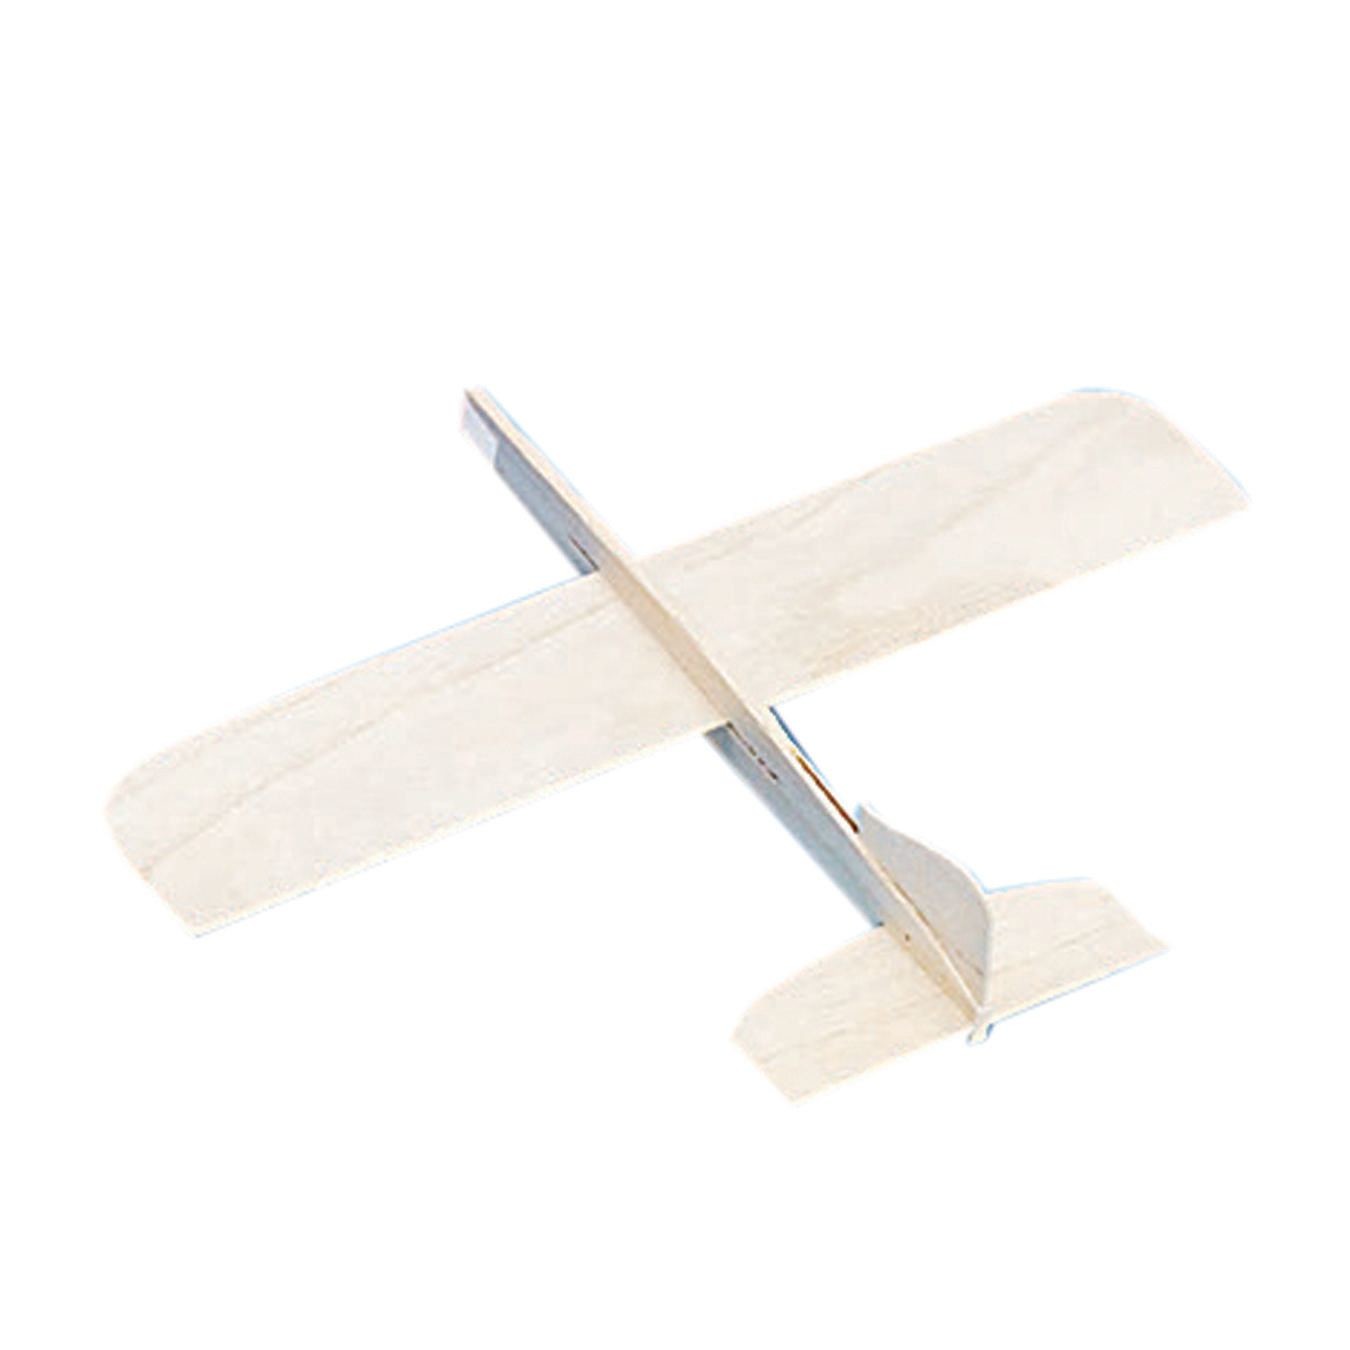 DPR Performance Glider Balsa Wood Model Plane Kit Chuckie Wingspan 300mm 